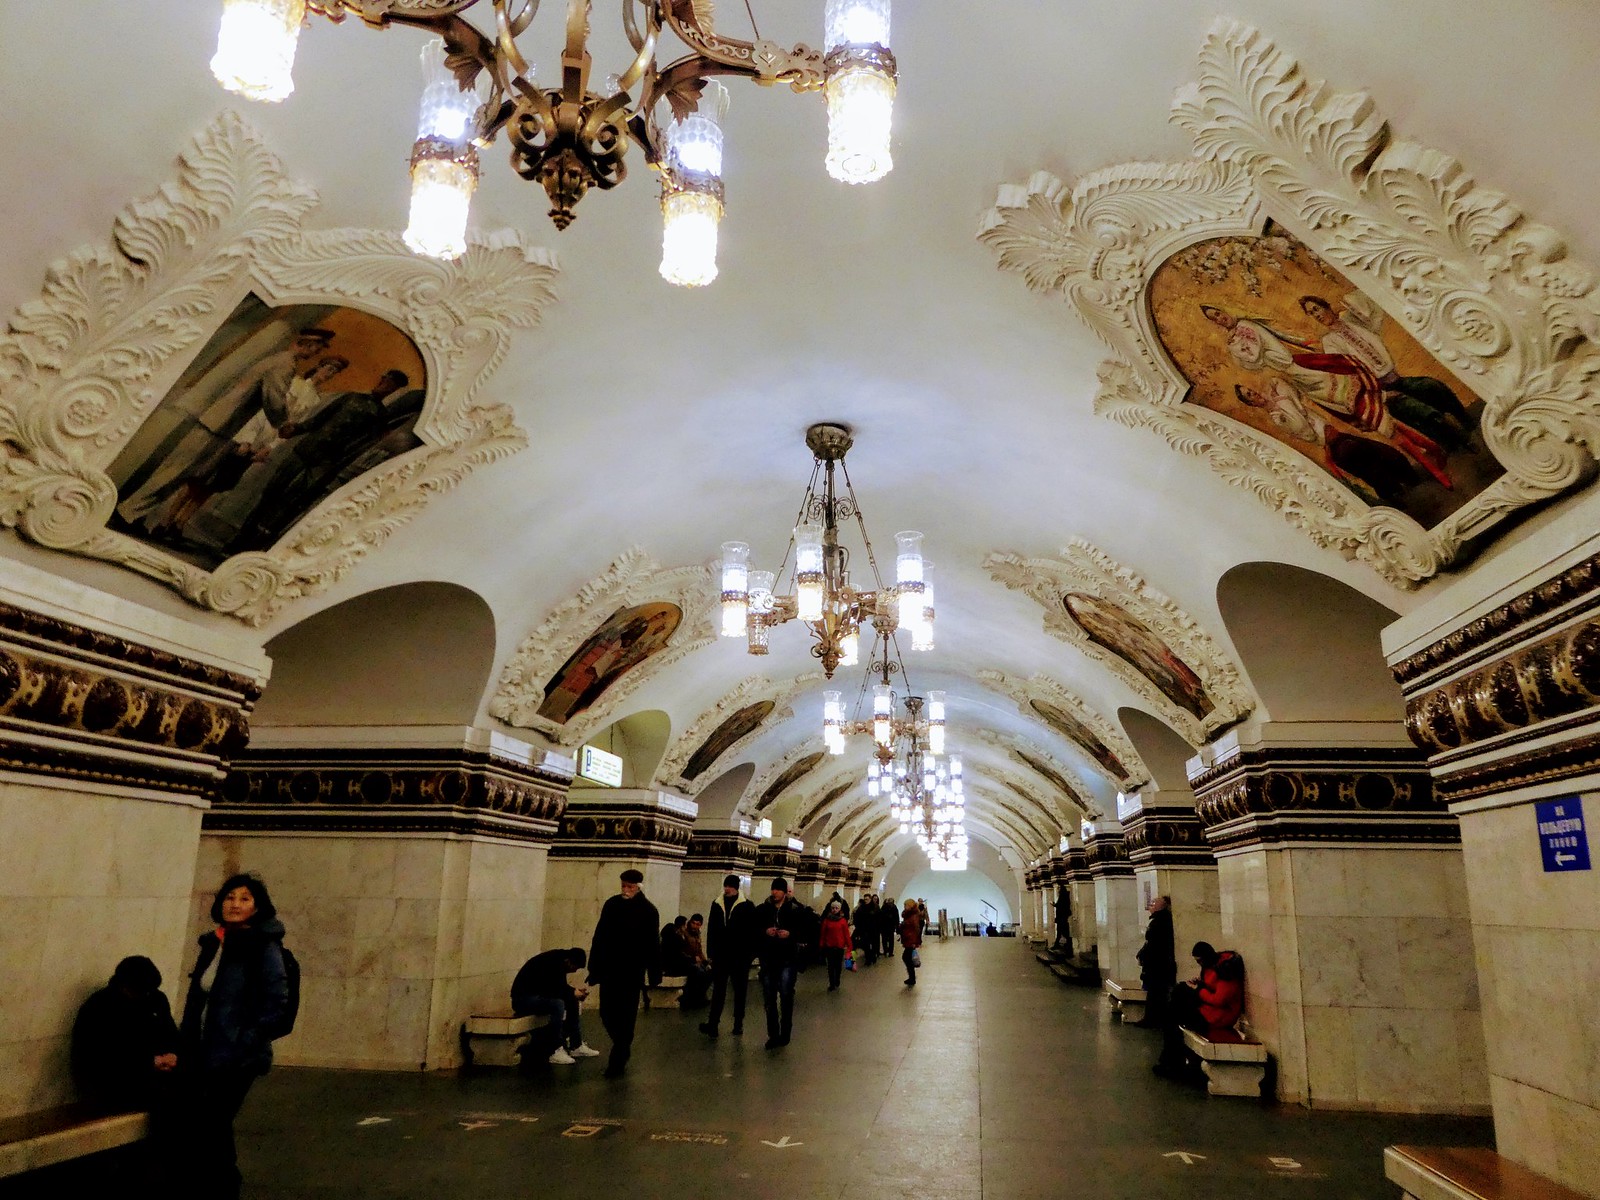 Kievskaya Metro Station, Moscow